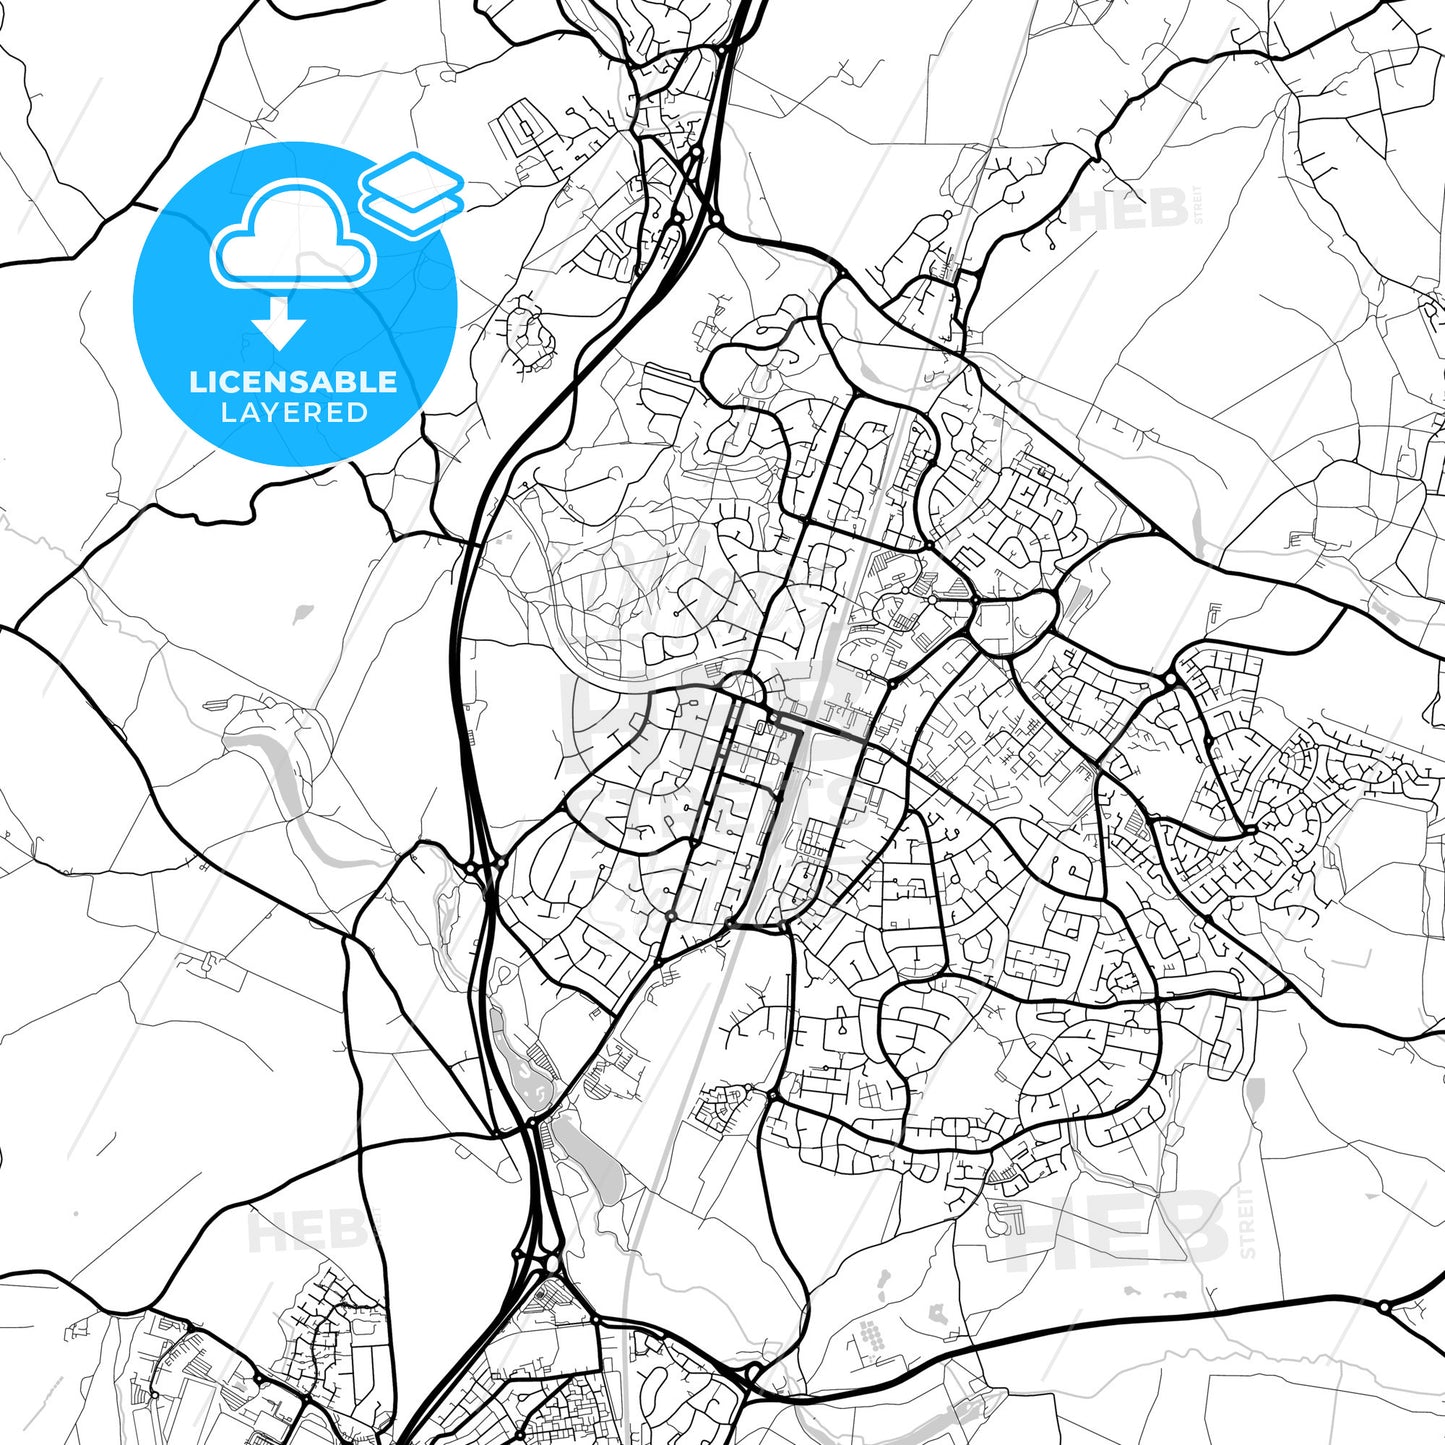 Layered PDF map of Welwyn Garden City, East of England, England